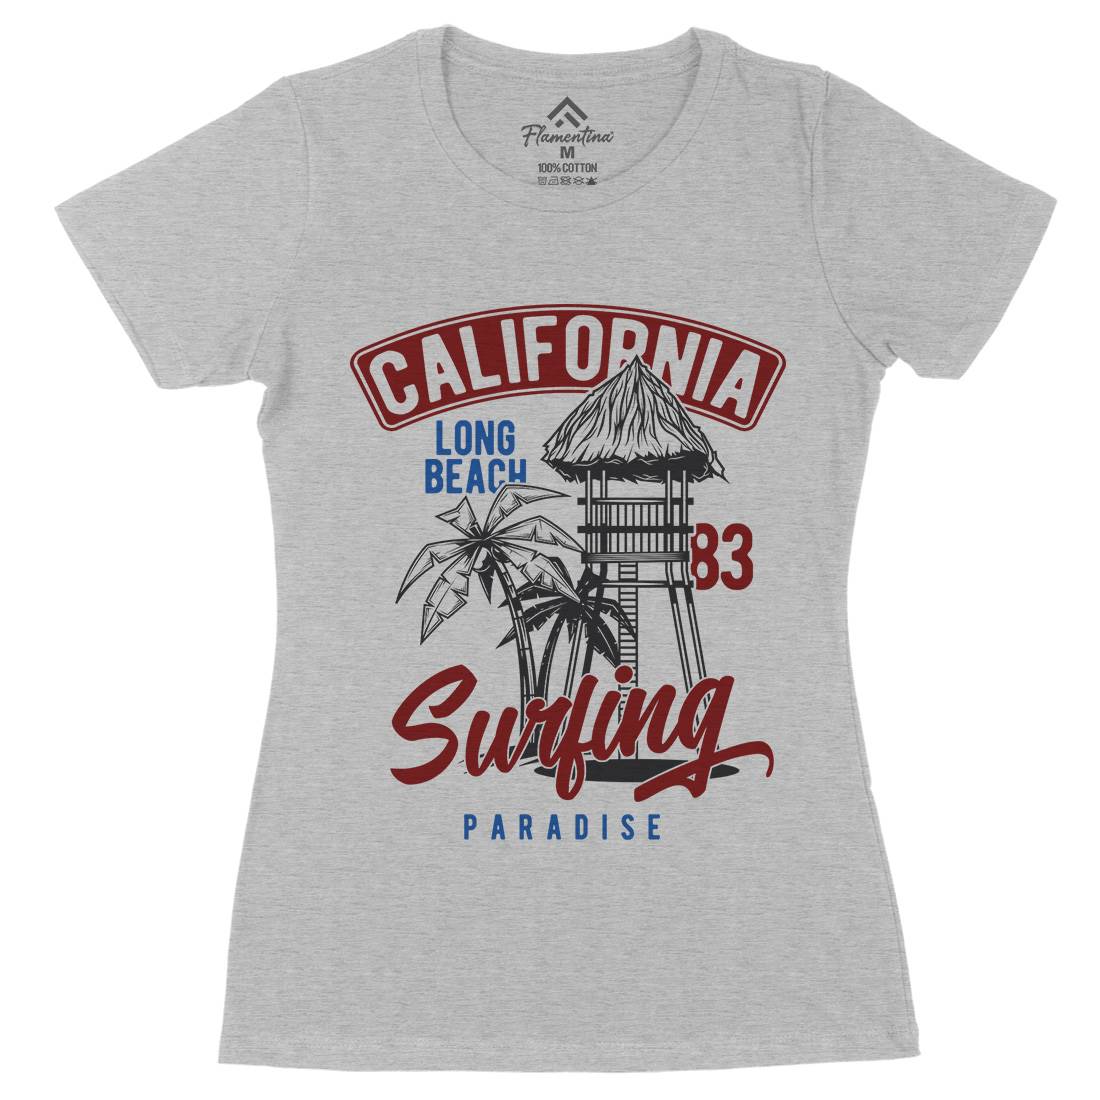 California Surfing Womens Organic Crew Neck T-Shirt Surf B882